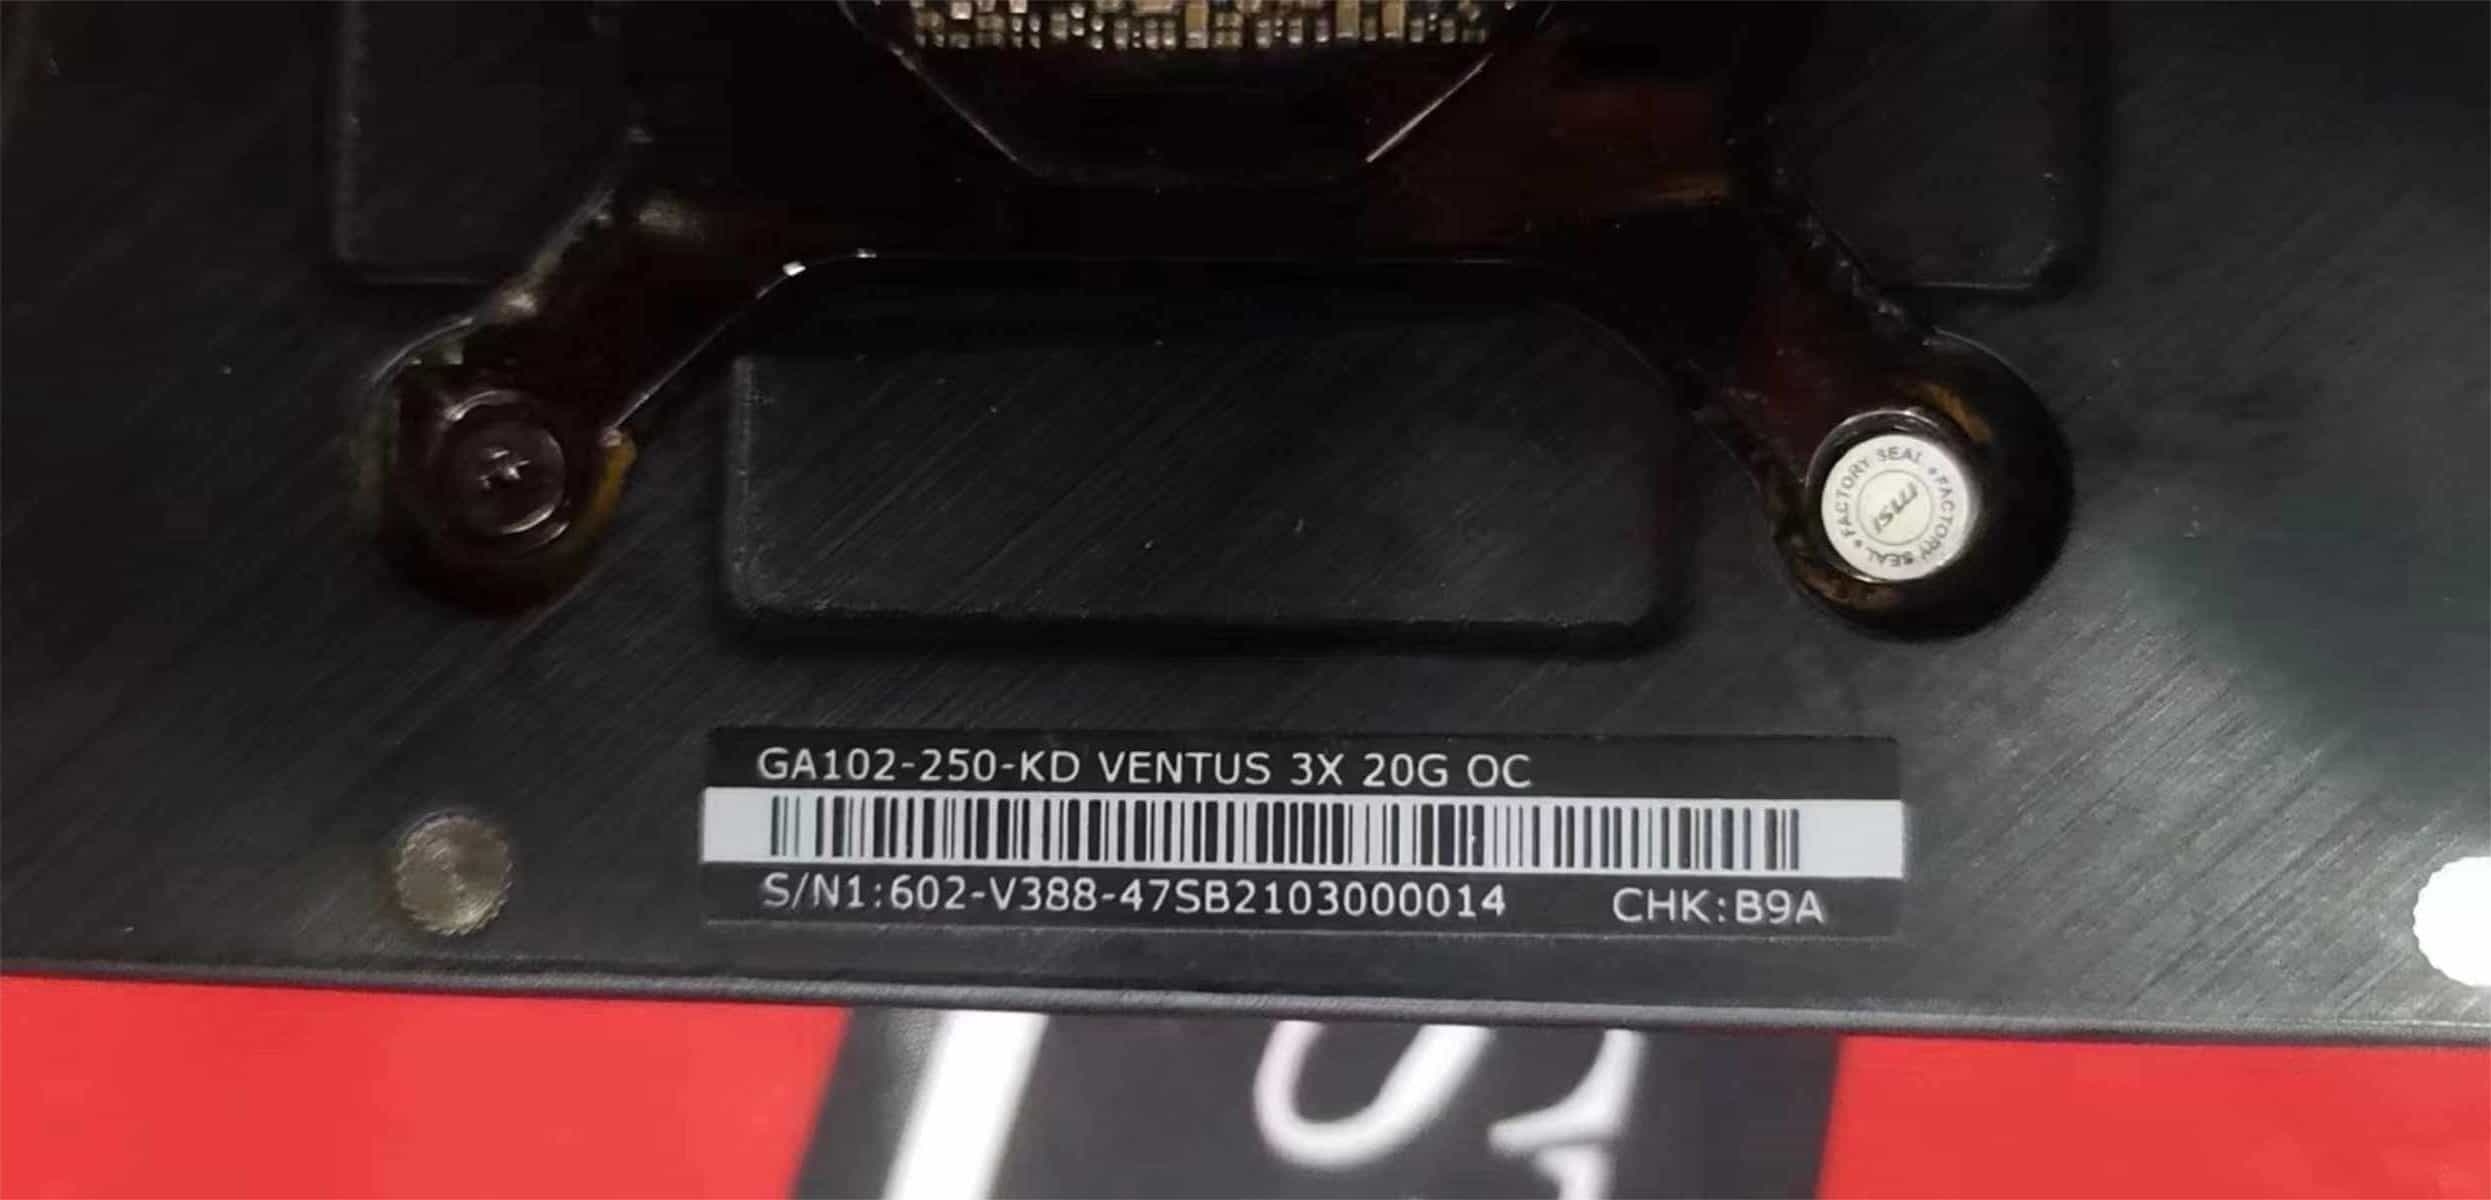 RTX 3080 20GB serial